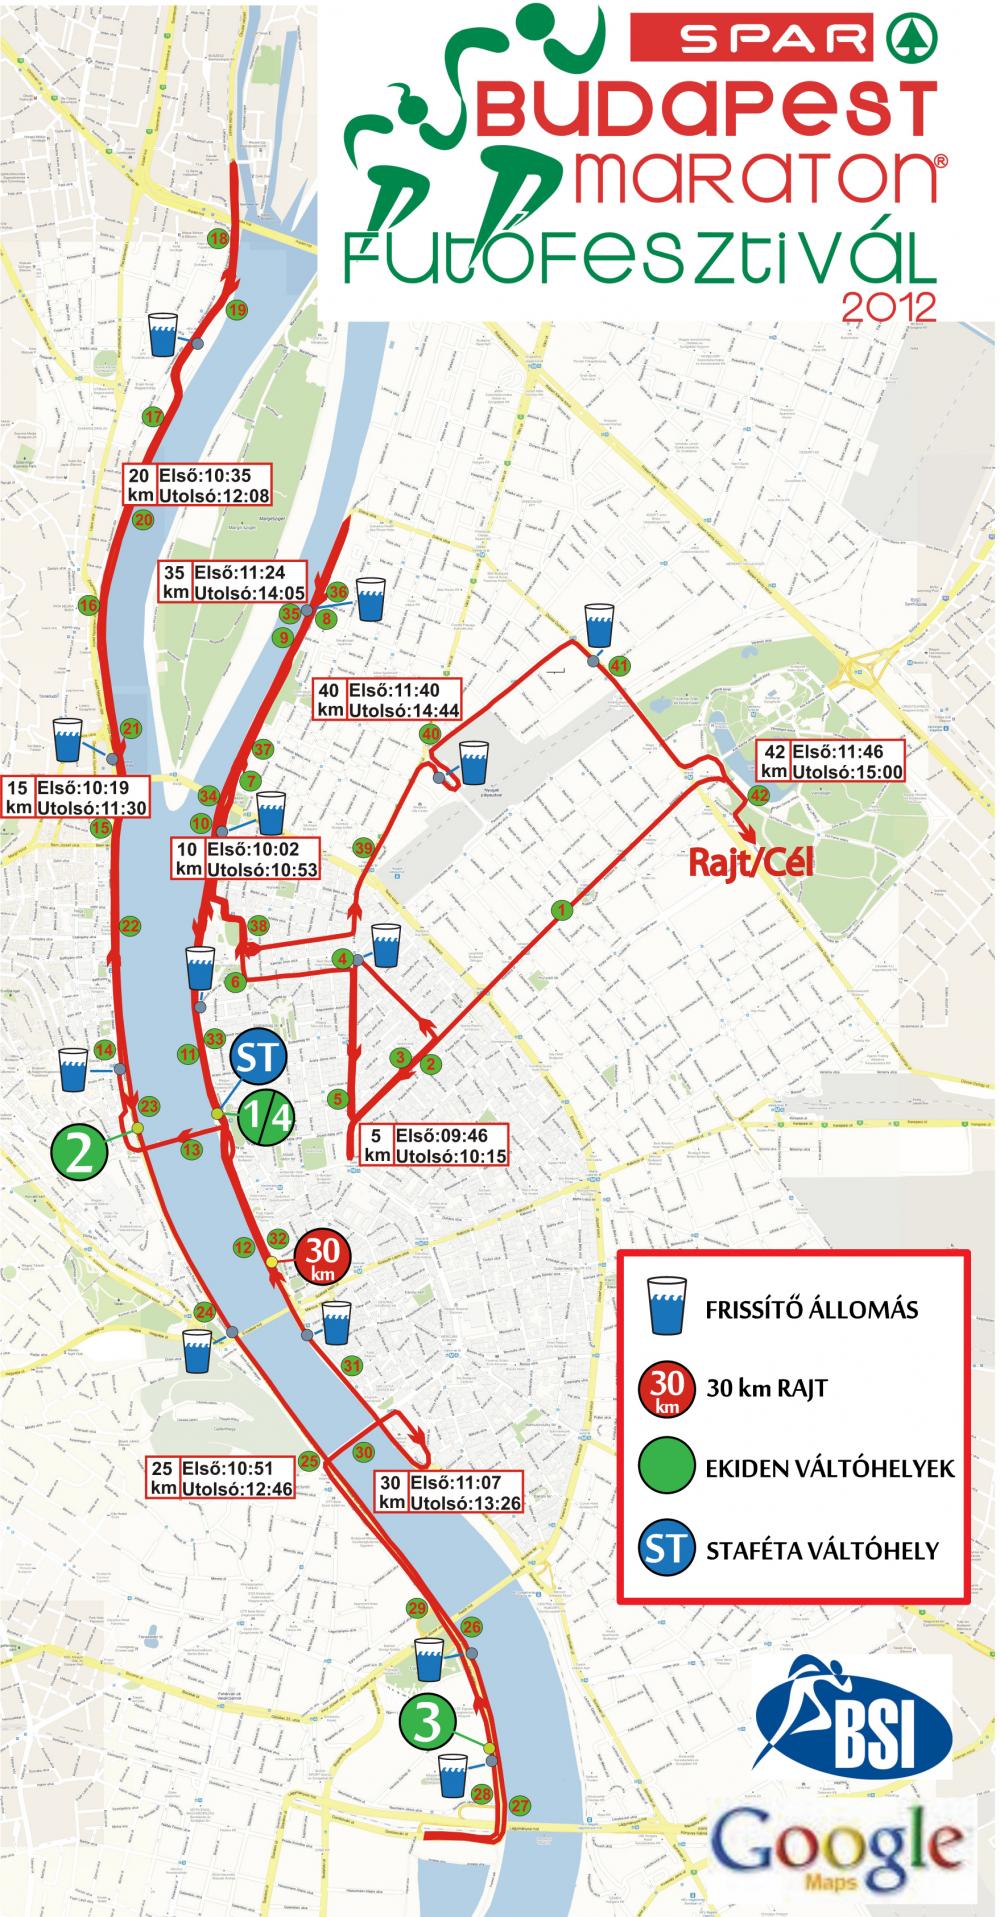 bp térkép utvonal 27. Spar Budapest Maraton   térkép   Futanet.hu bp térkép utvonal